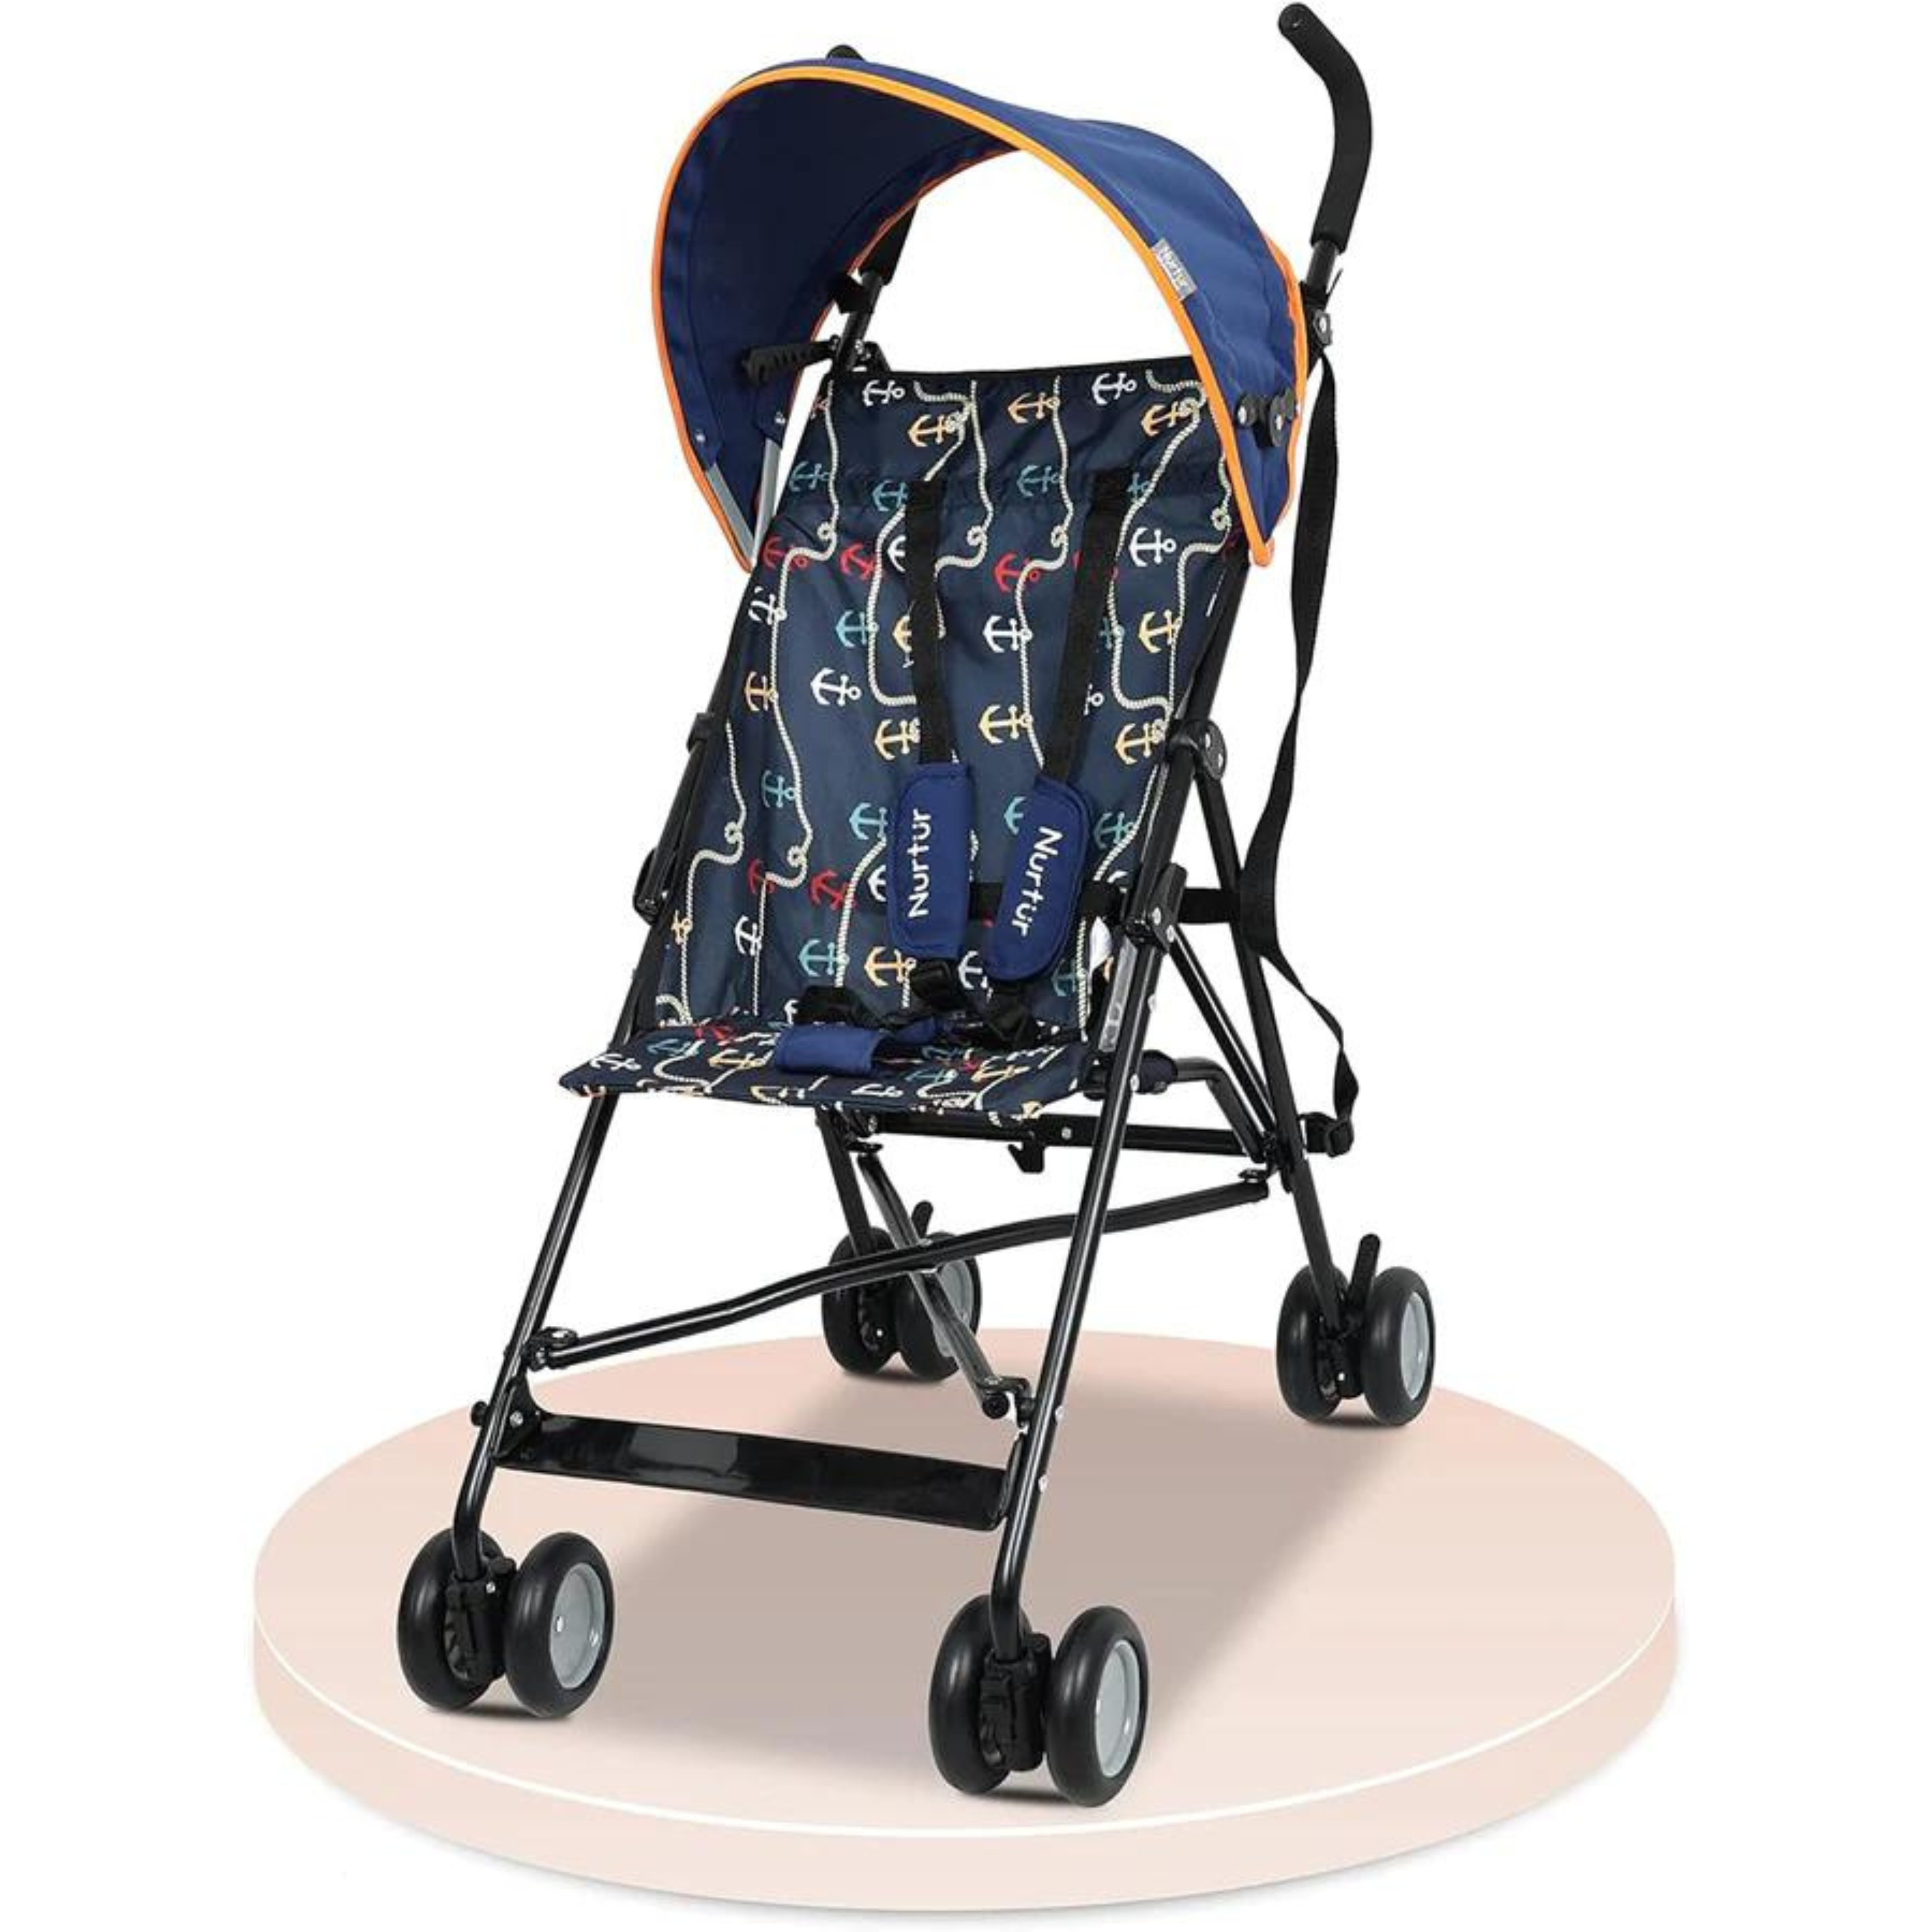 Nurtur Rex Convenience Infant Buggy Stroller, Lightweight Stroller with ‎Alloy Steel Frame, Compact Fold, Canopy, Shoulder Strap, 6-36 months, (Official Nurtur Product)